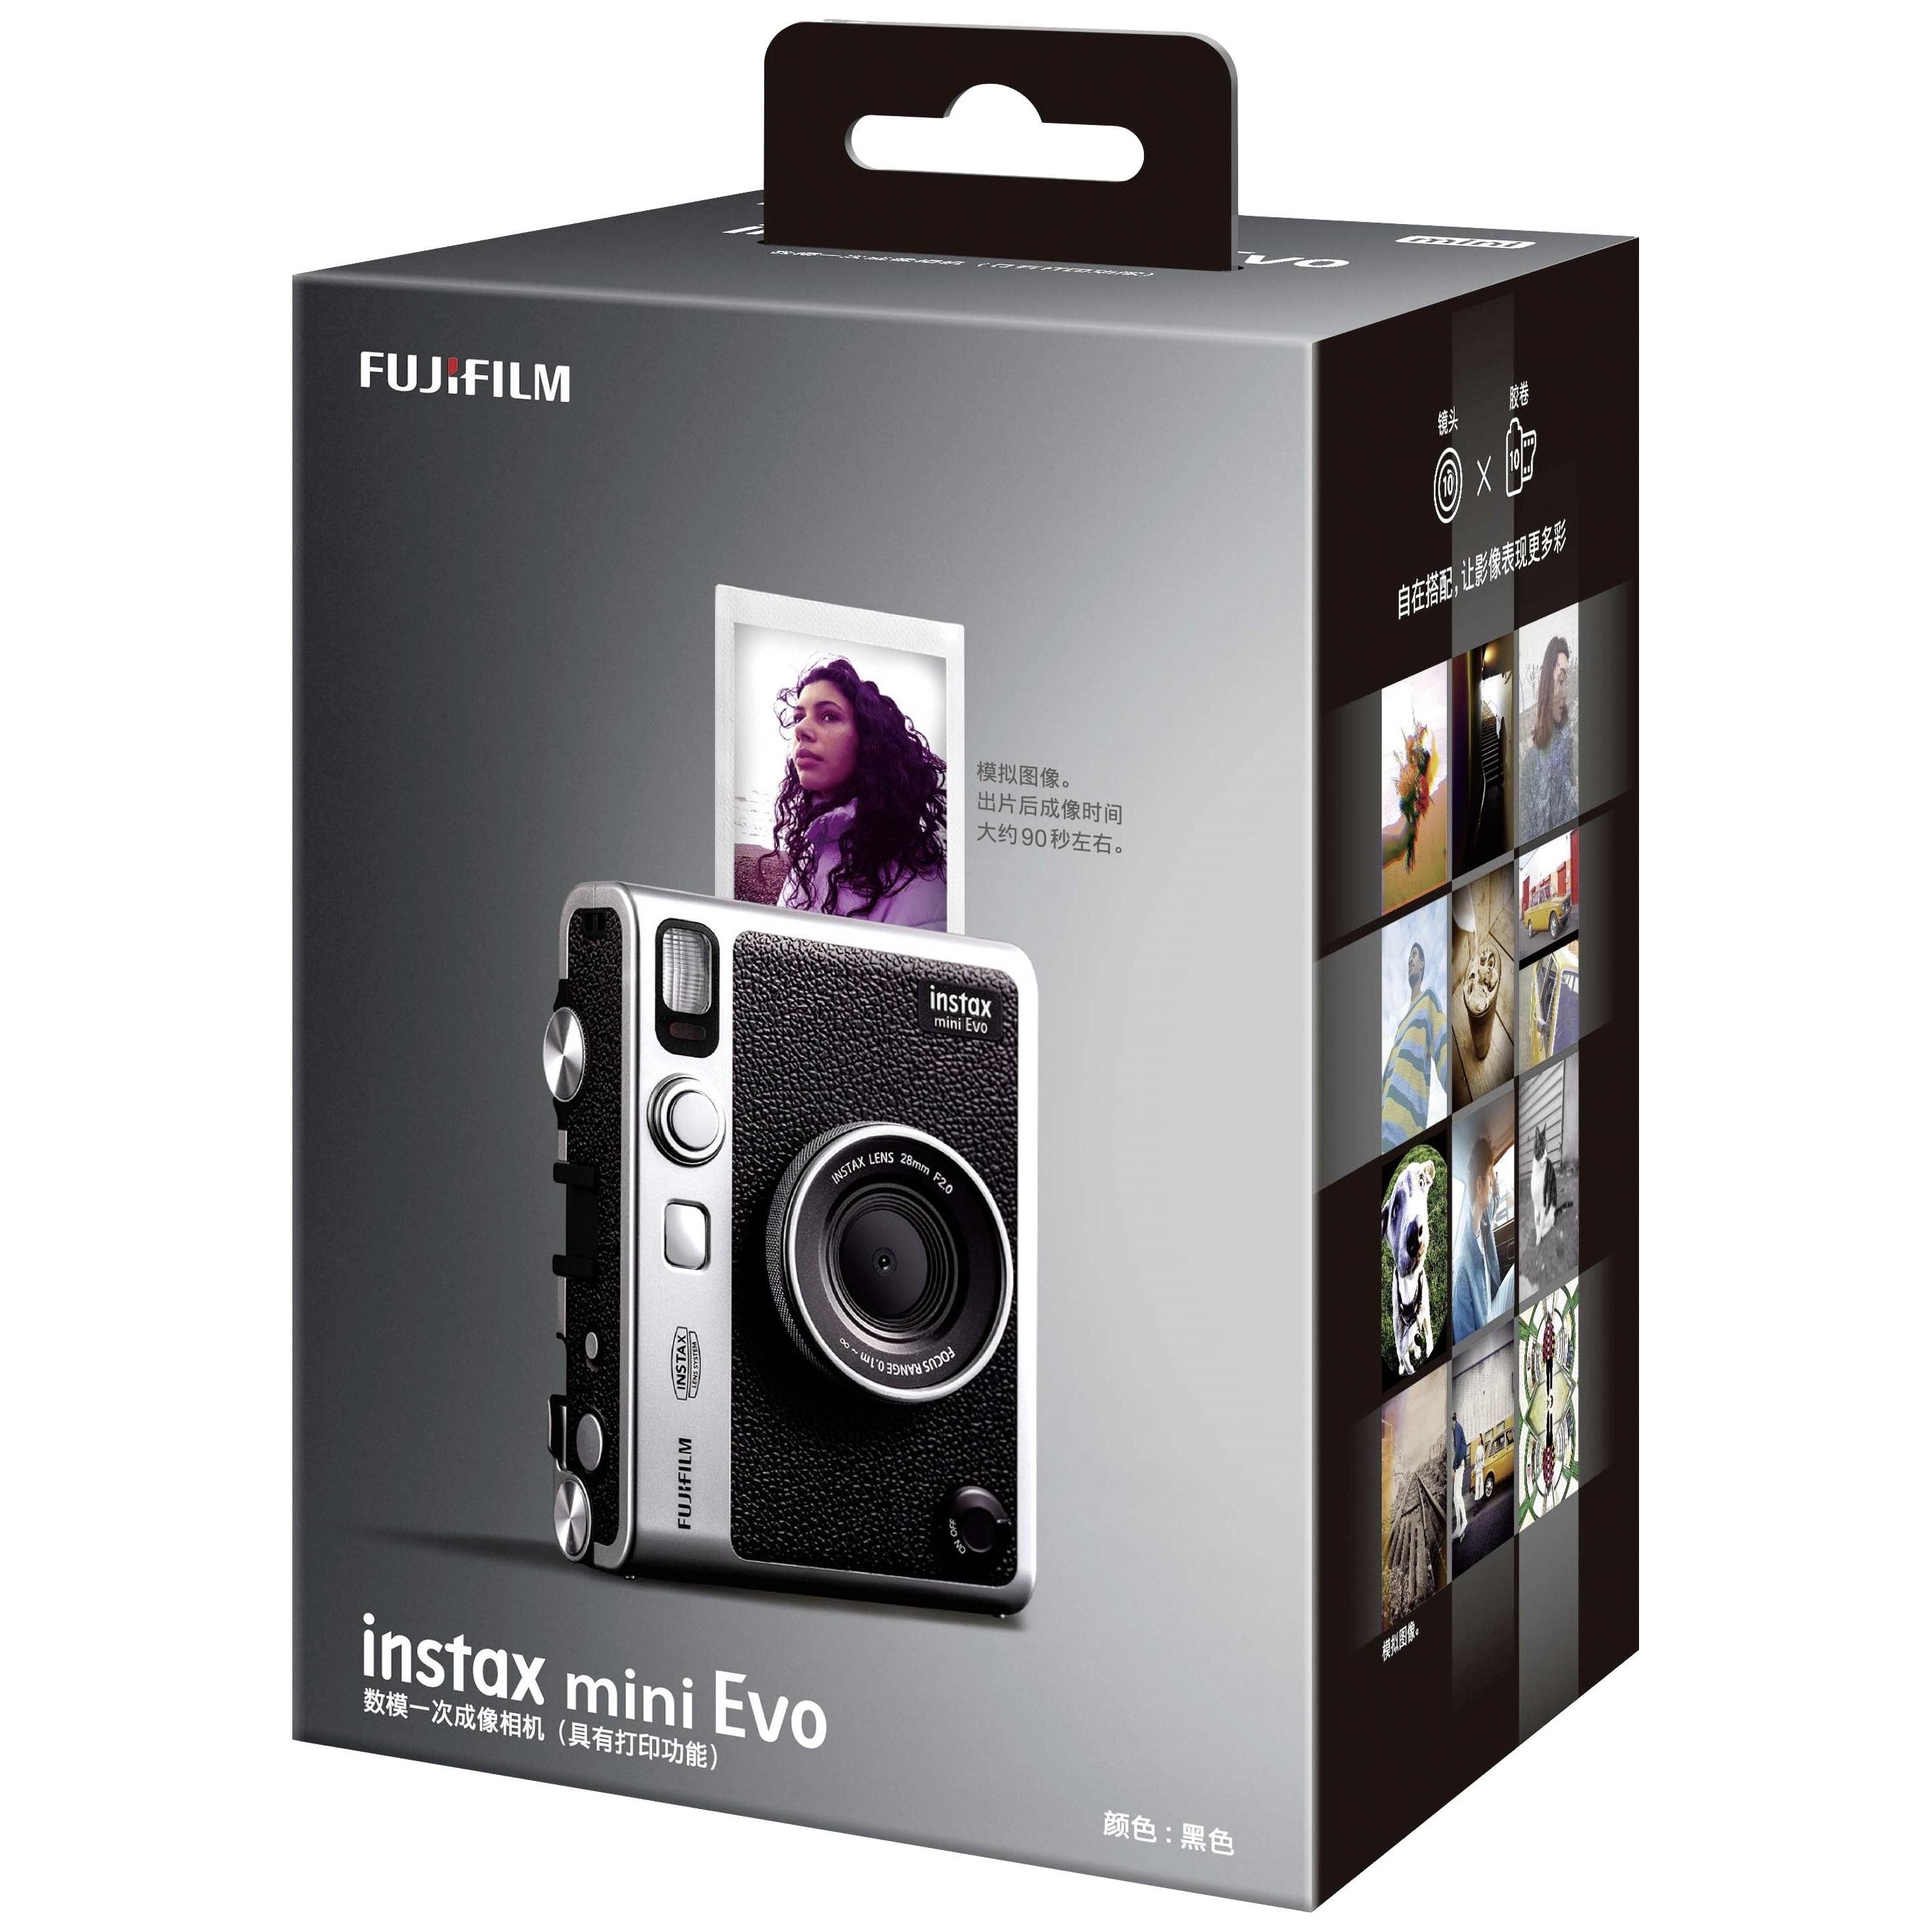 Fujifilm Instax Mini Evo Instant Film Camera Fujifilm